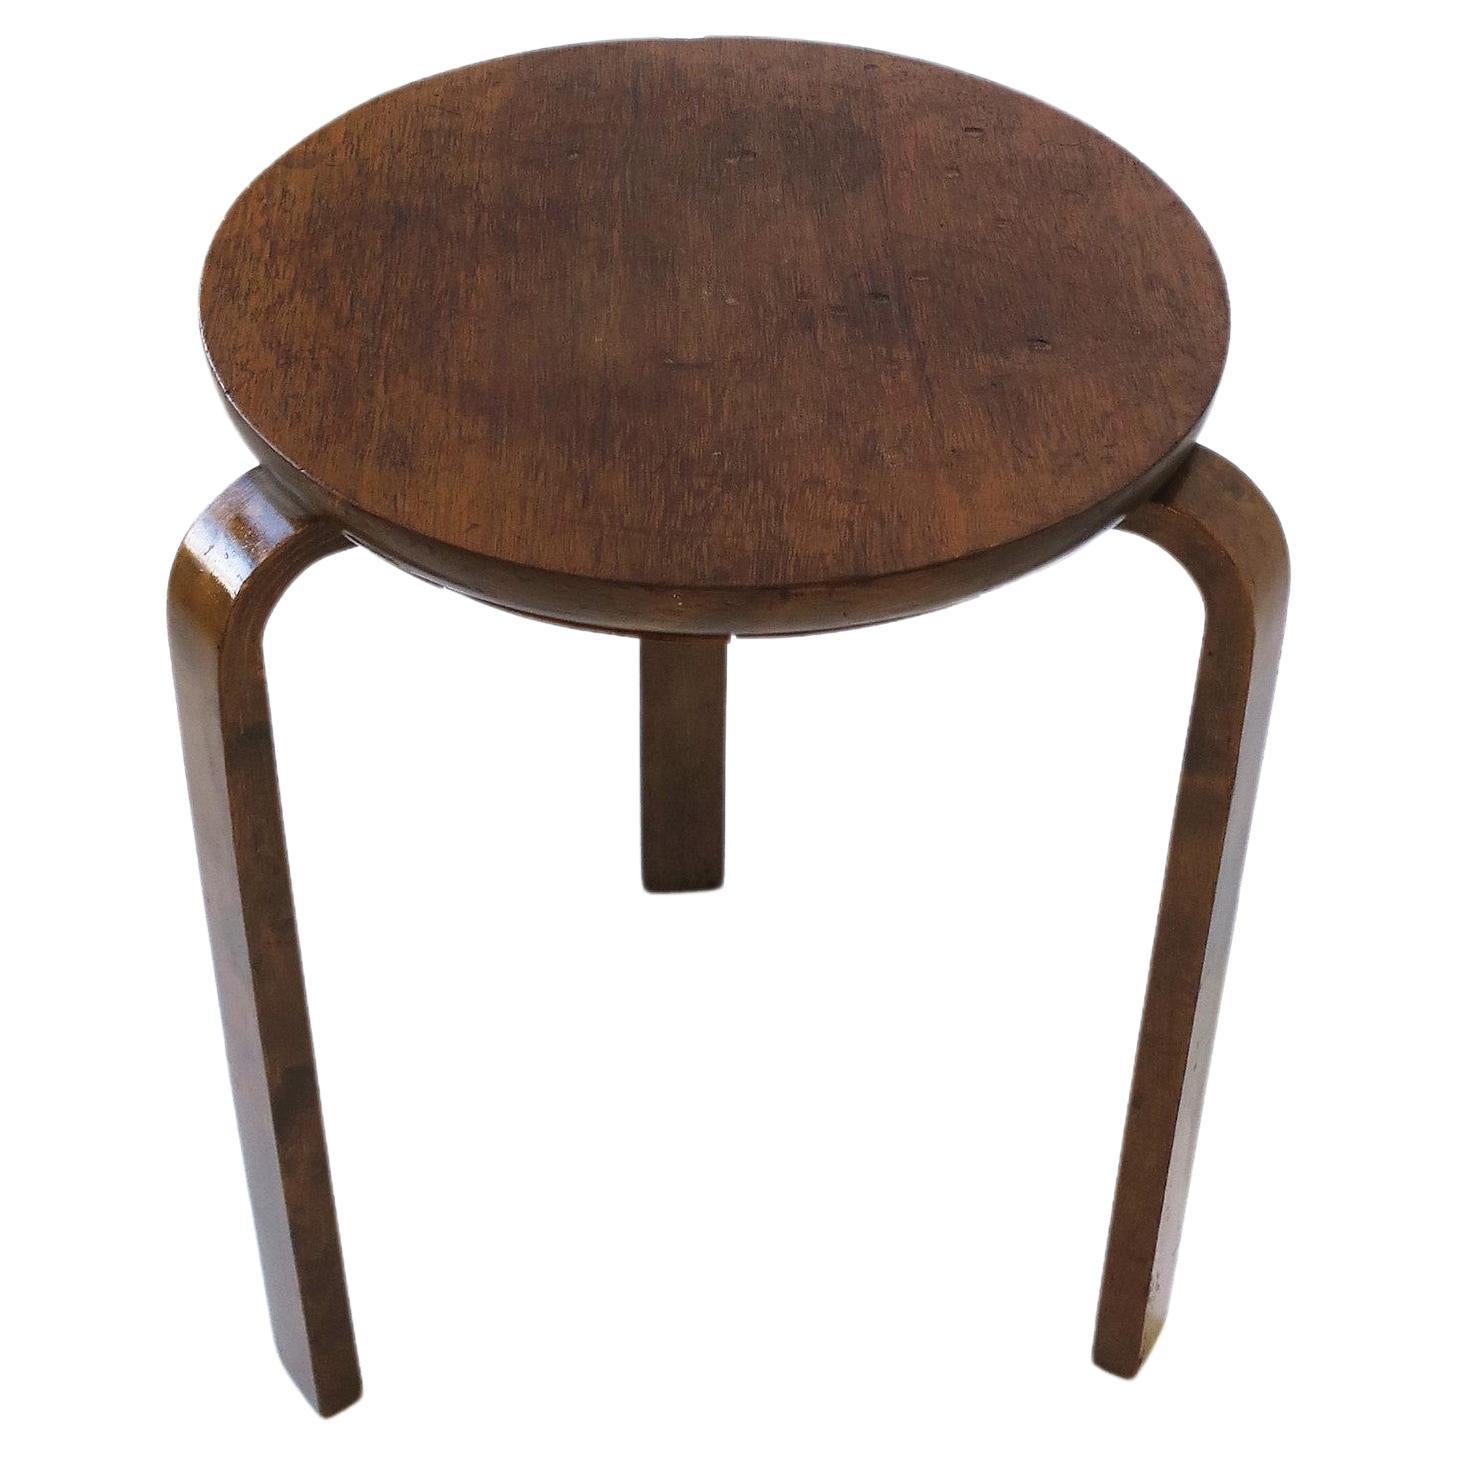 Swedish Scandinavian Modern Bentwood Stool or Side Table after Alvar Aalto